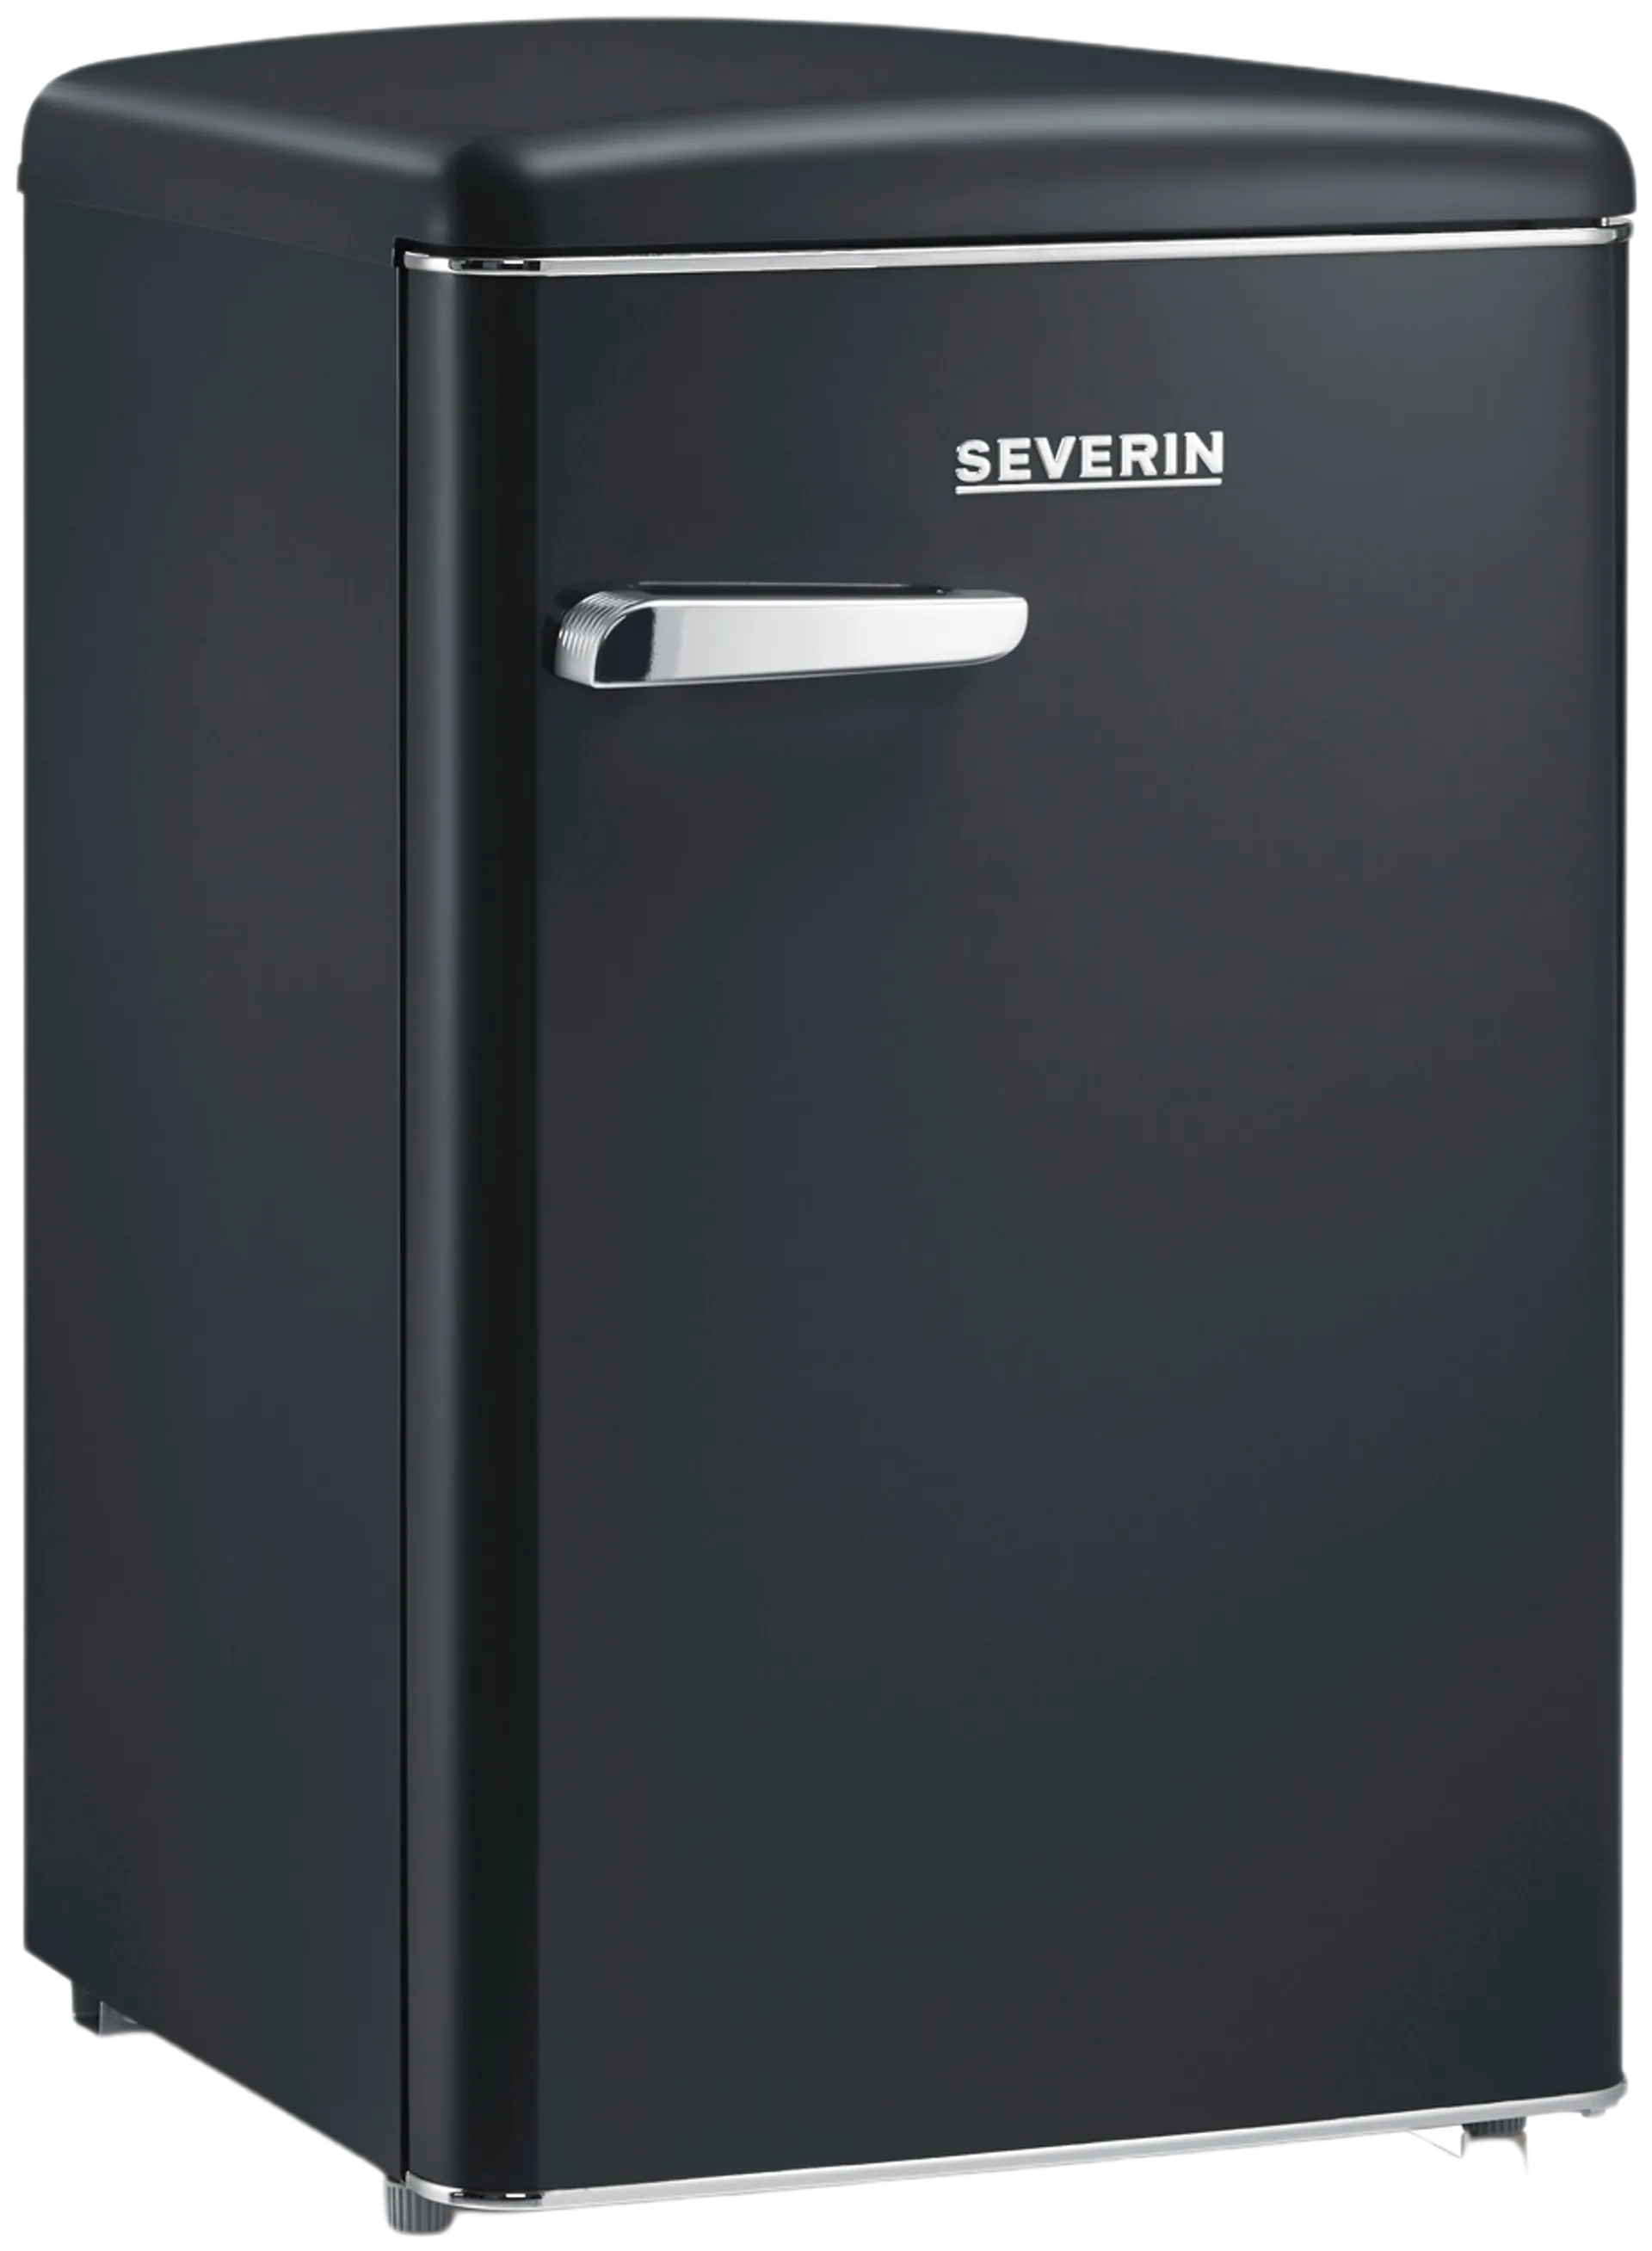 Severin jääkaappi pakastelokerolla RKS8832 musta - 1